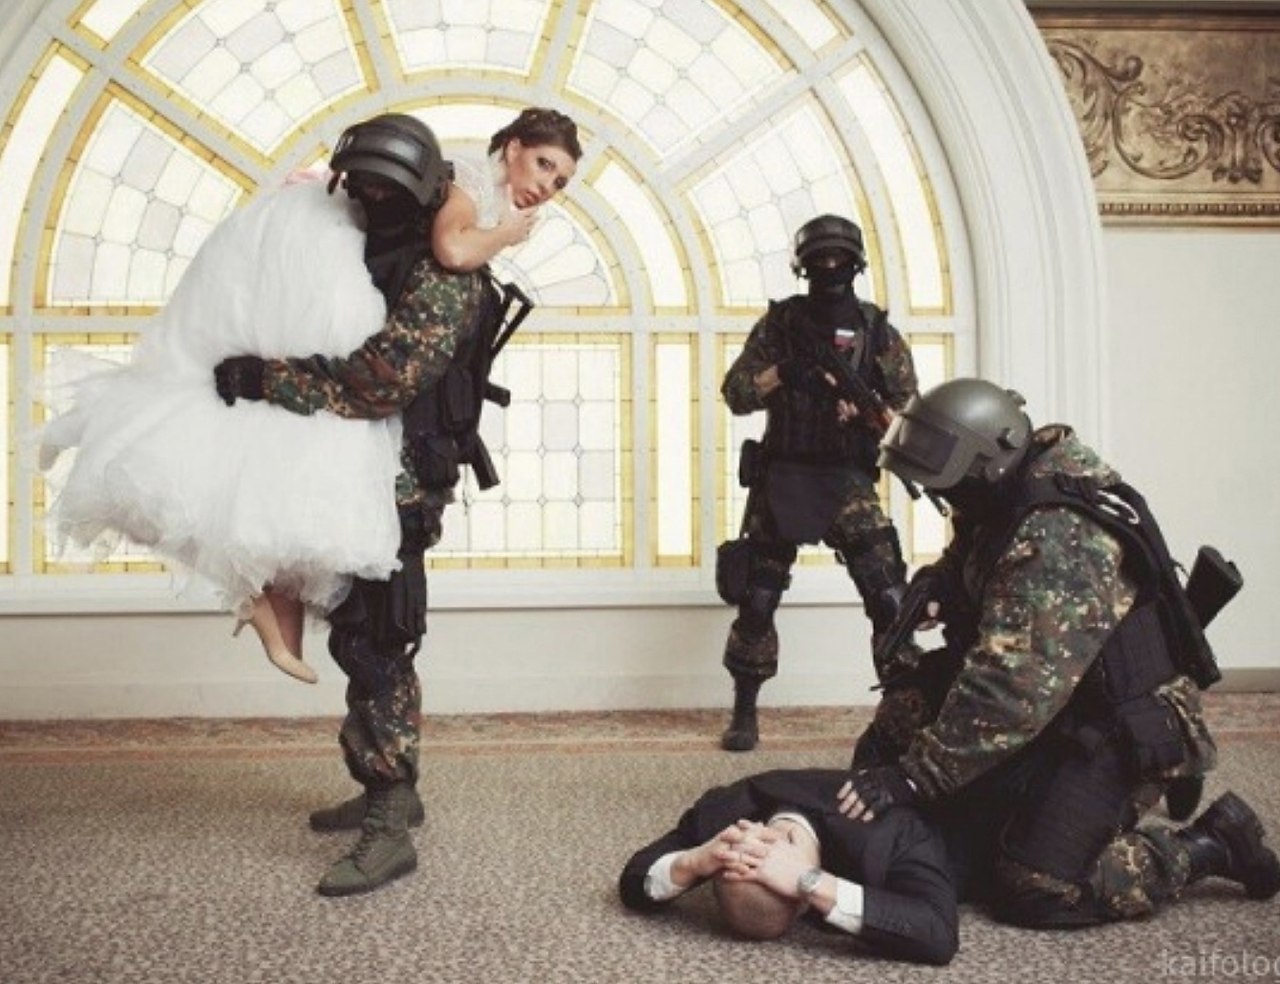 Украли невесту на свадьбе. Спецназ на свадьбе. Похищение невесты на свадьбе. Свадьба спецназовца. Свадебная фотосессия с оружием.